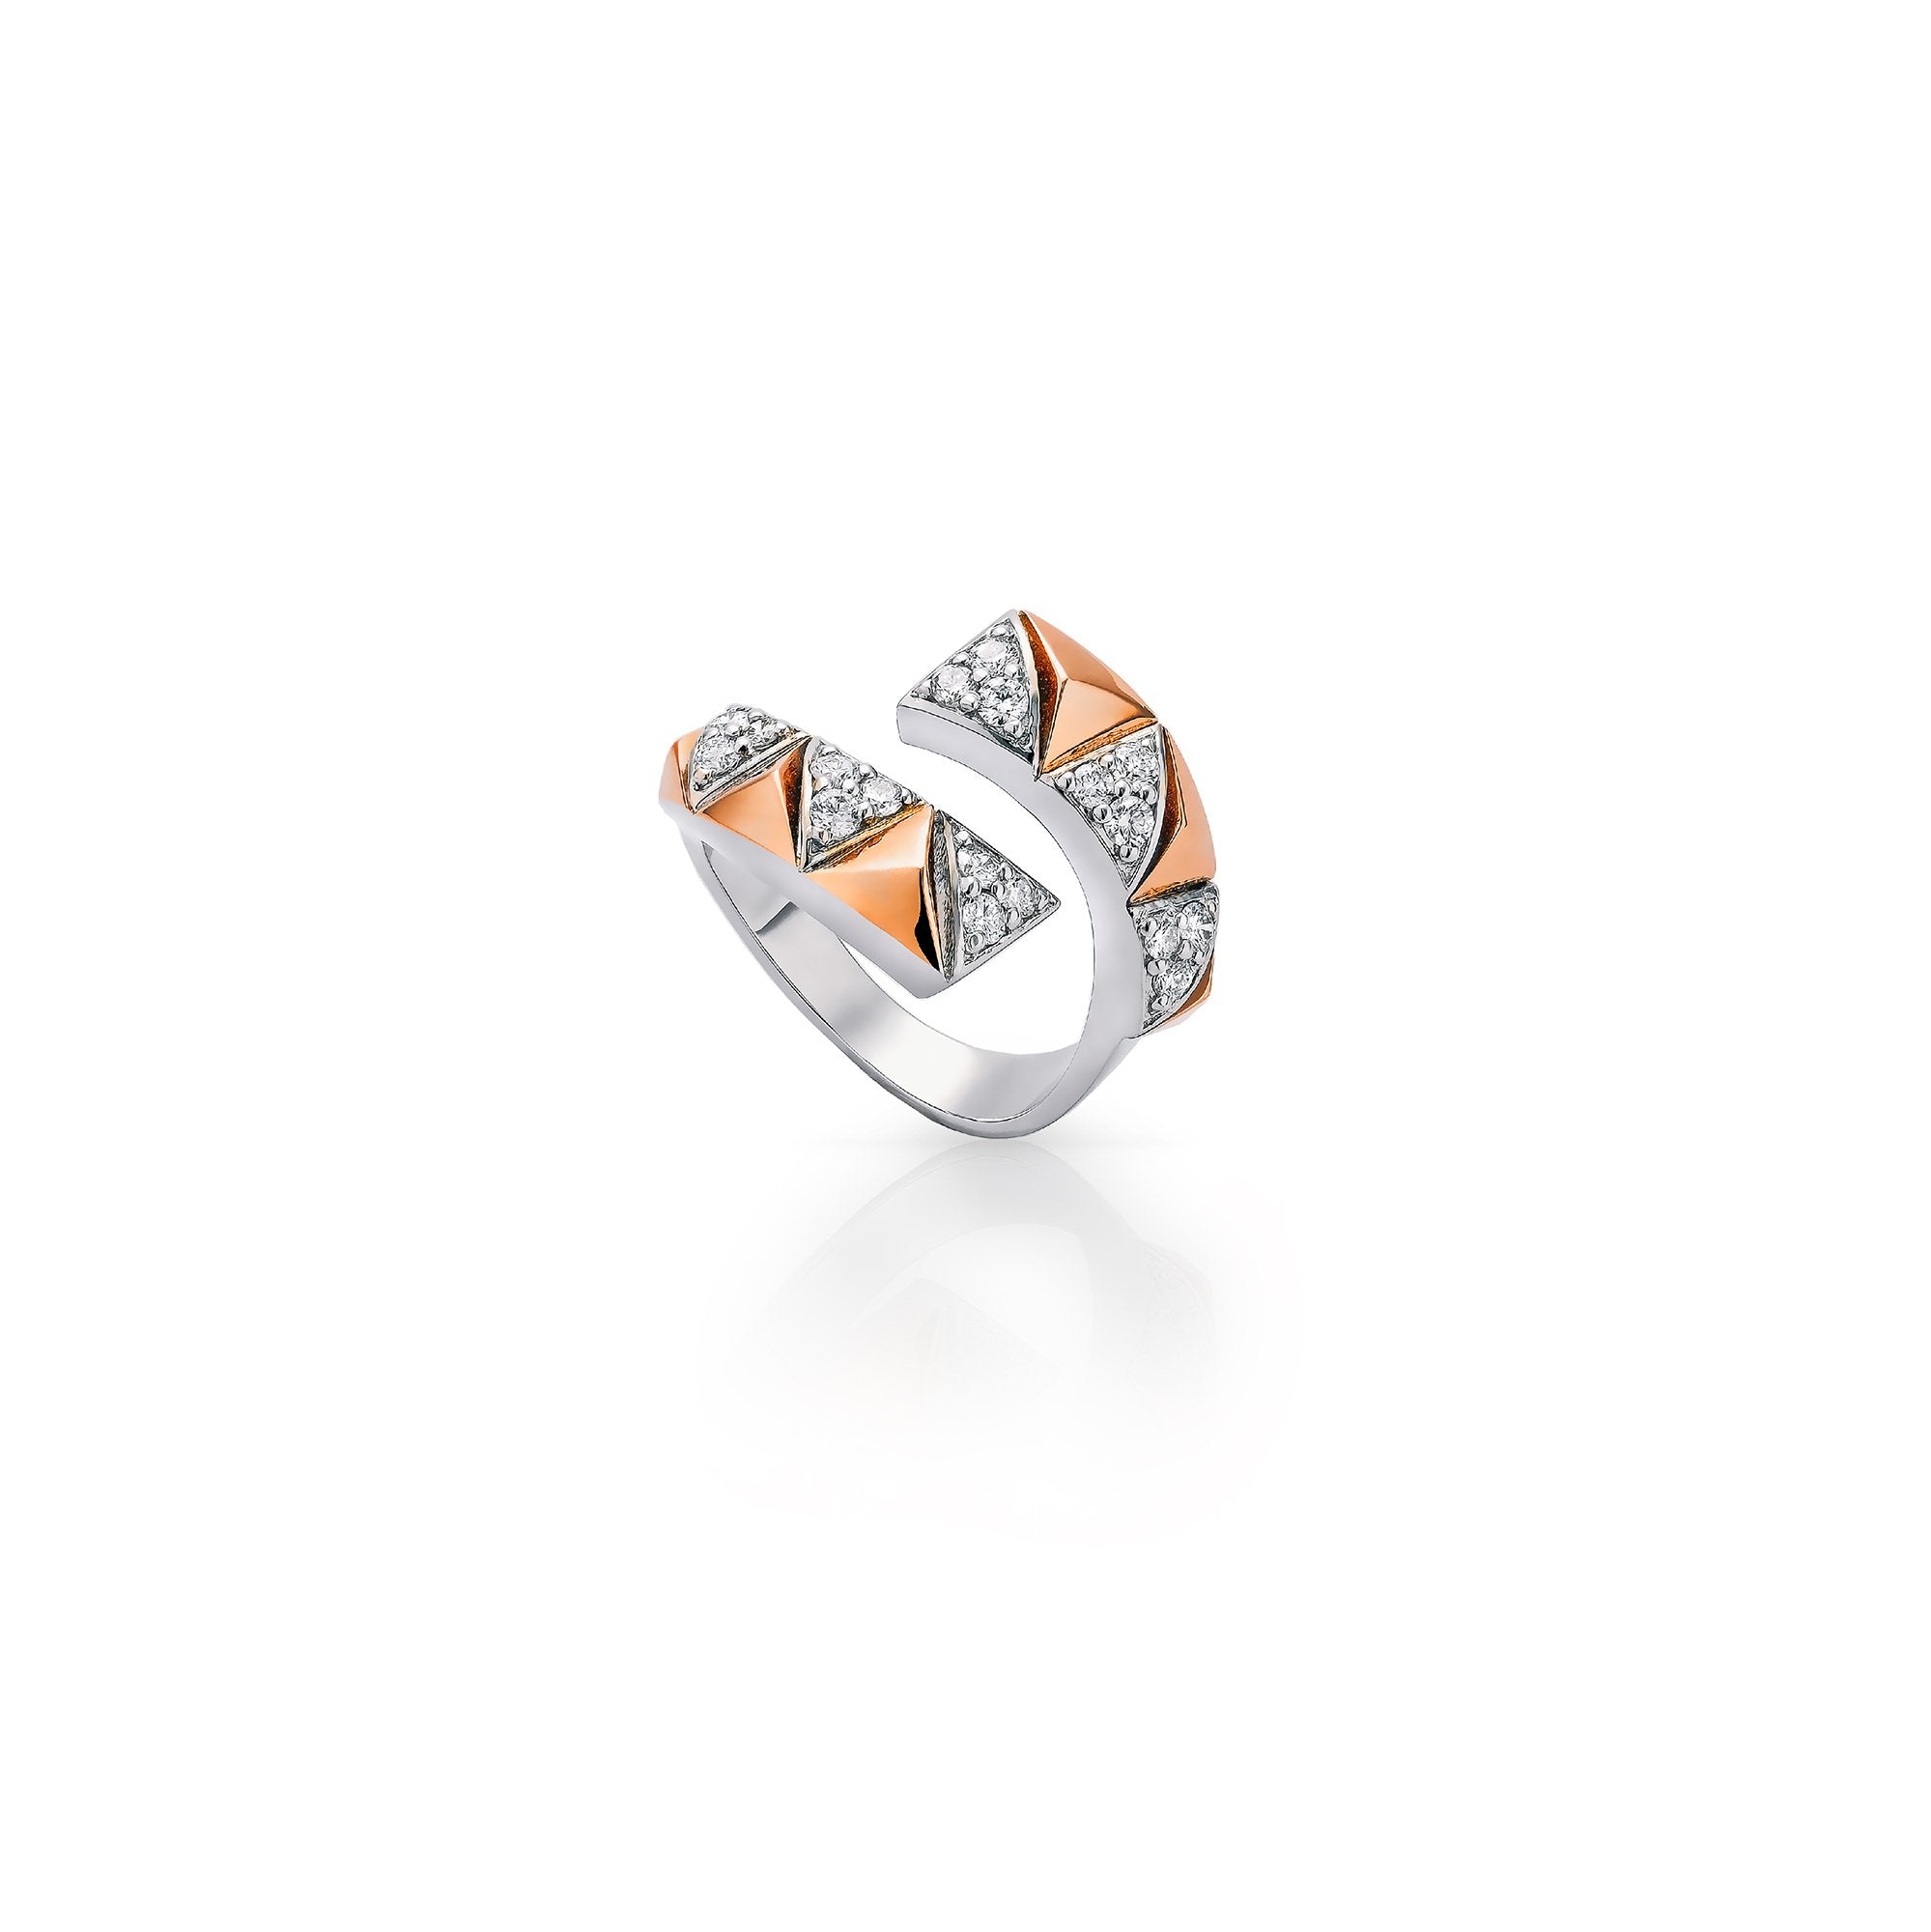 Okre by Yessayan - Pyramid Rose & White Gold Diamond Ring | Jewellery Design | Buy Rings Online